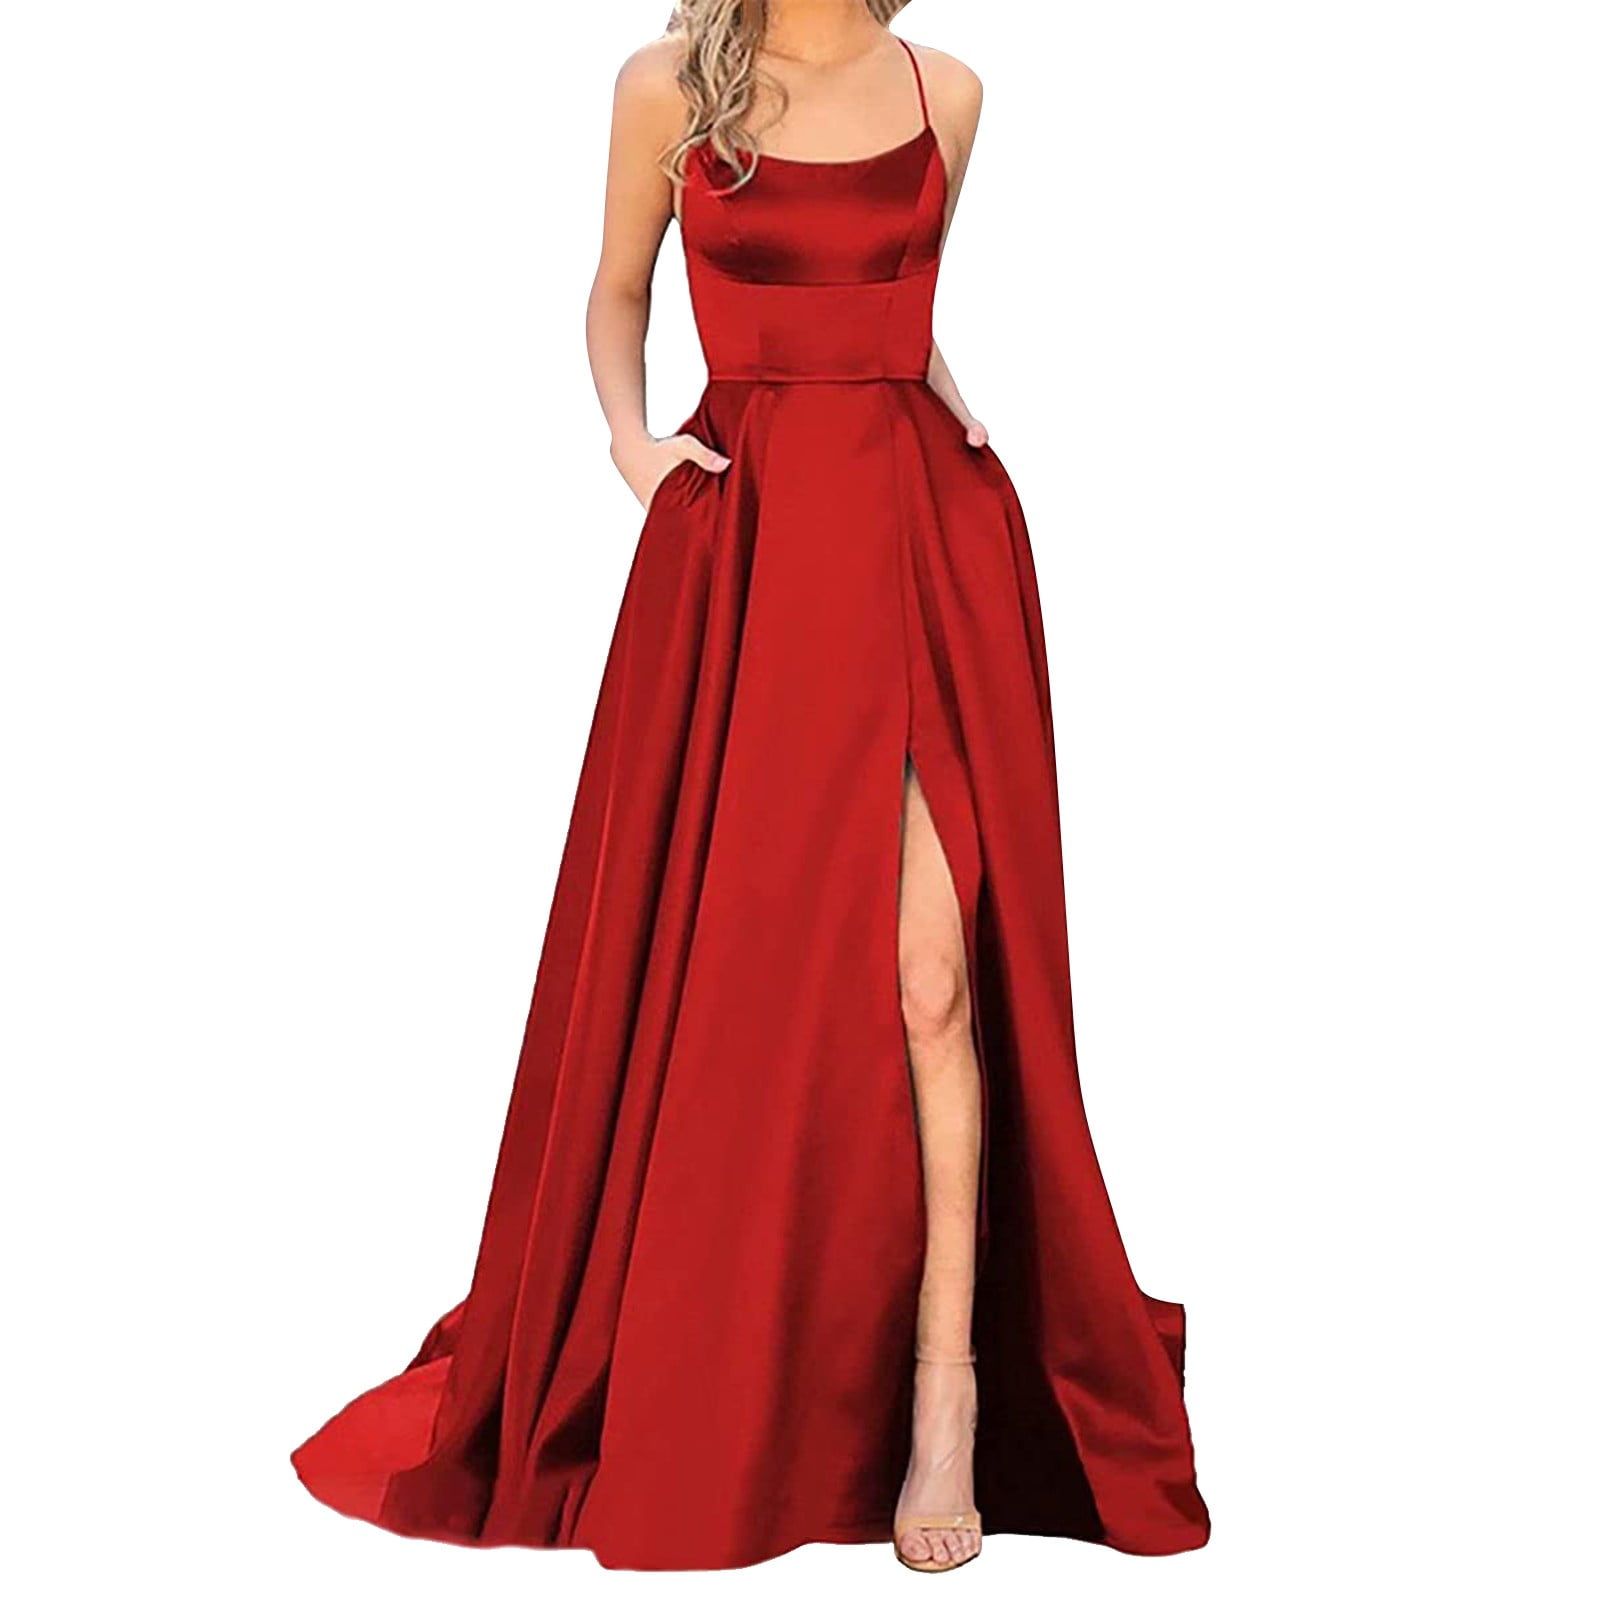 Wozhidaose Prom Dress Red Dresses for Women Long Elegant Halter Backless  Crisn Satin Spaghetti Party Side Slit Wedding Evening Party Dress Bodycon